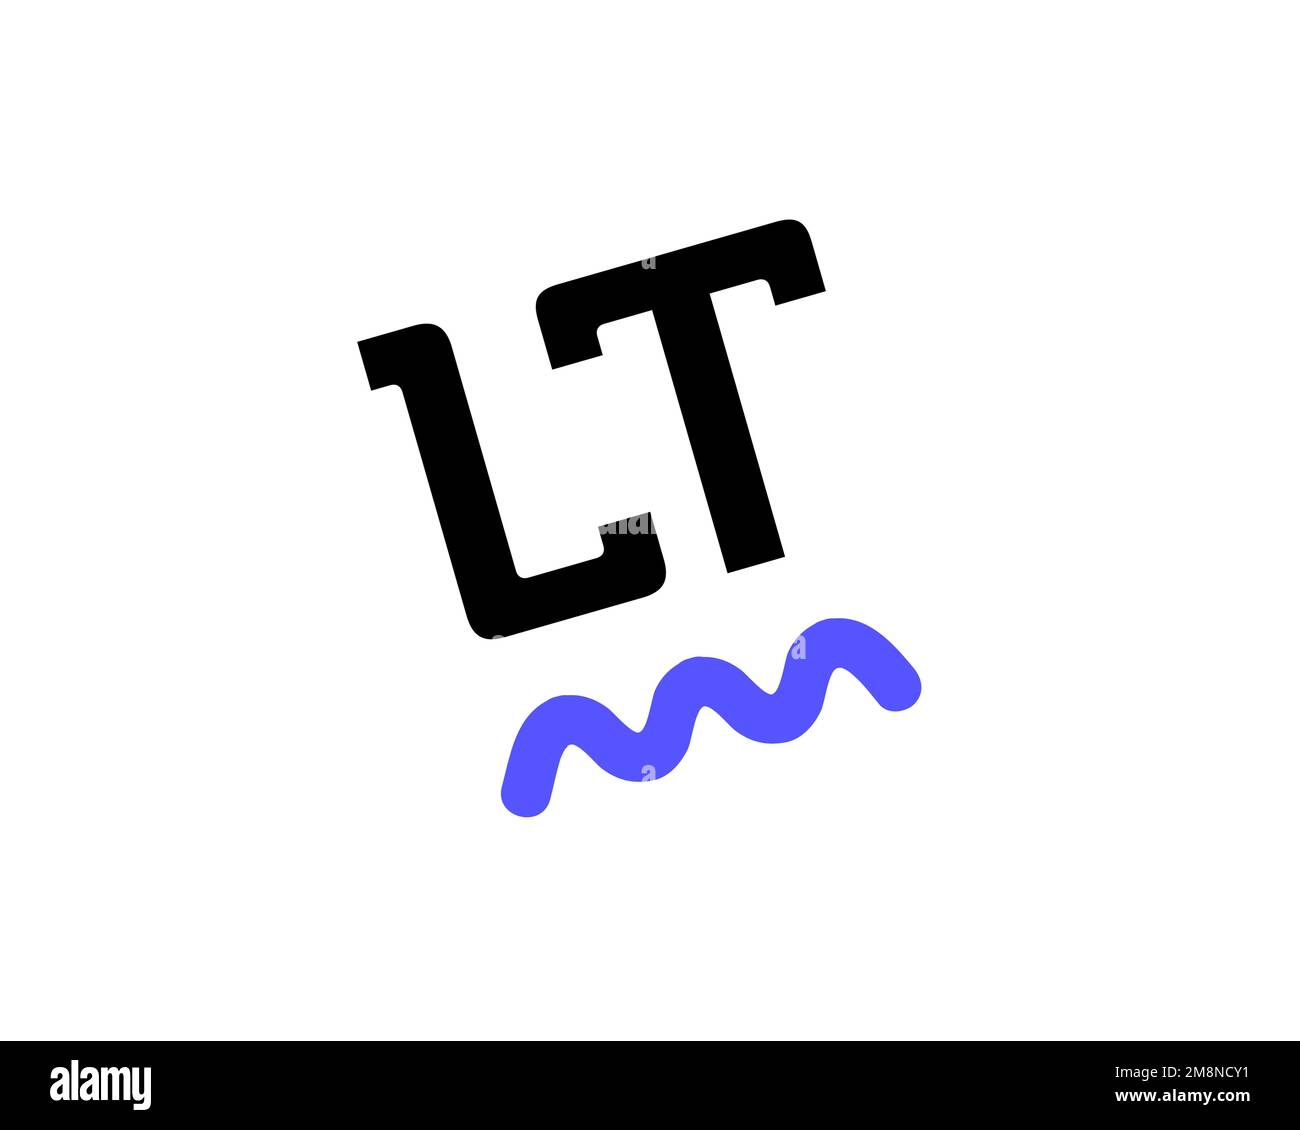 LanguageTool, logo pivoté, fond blanc Photo Stock - Alamy